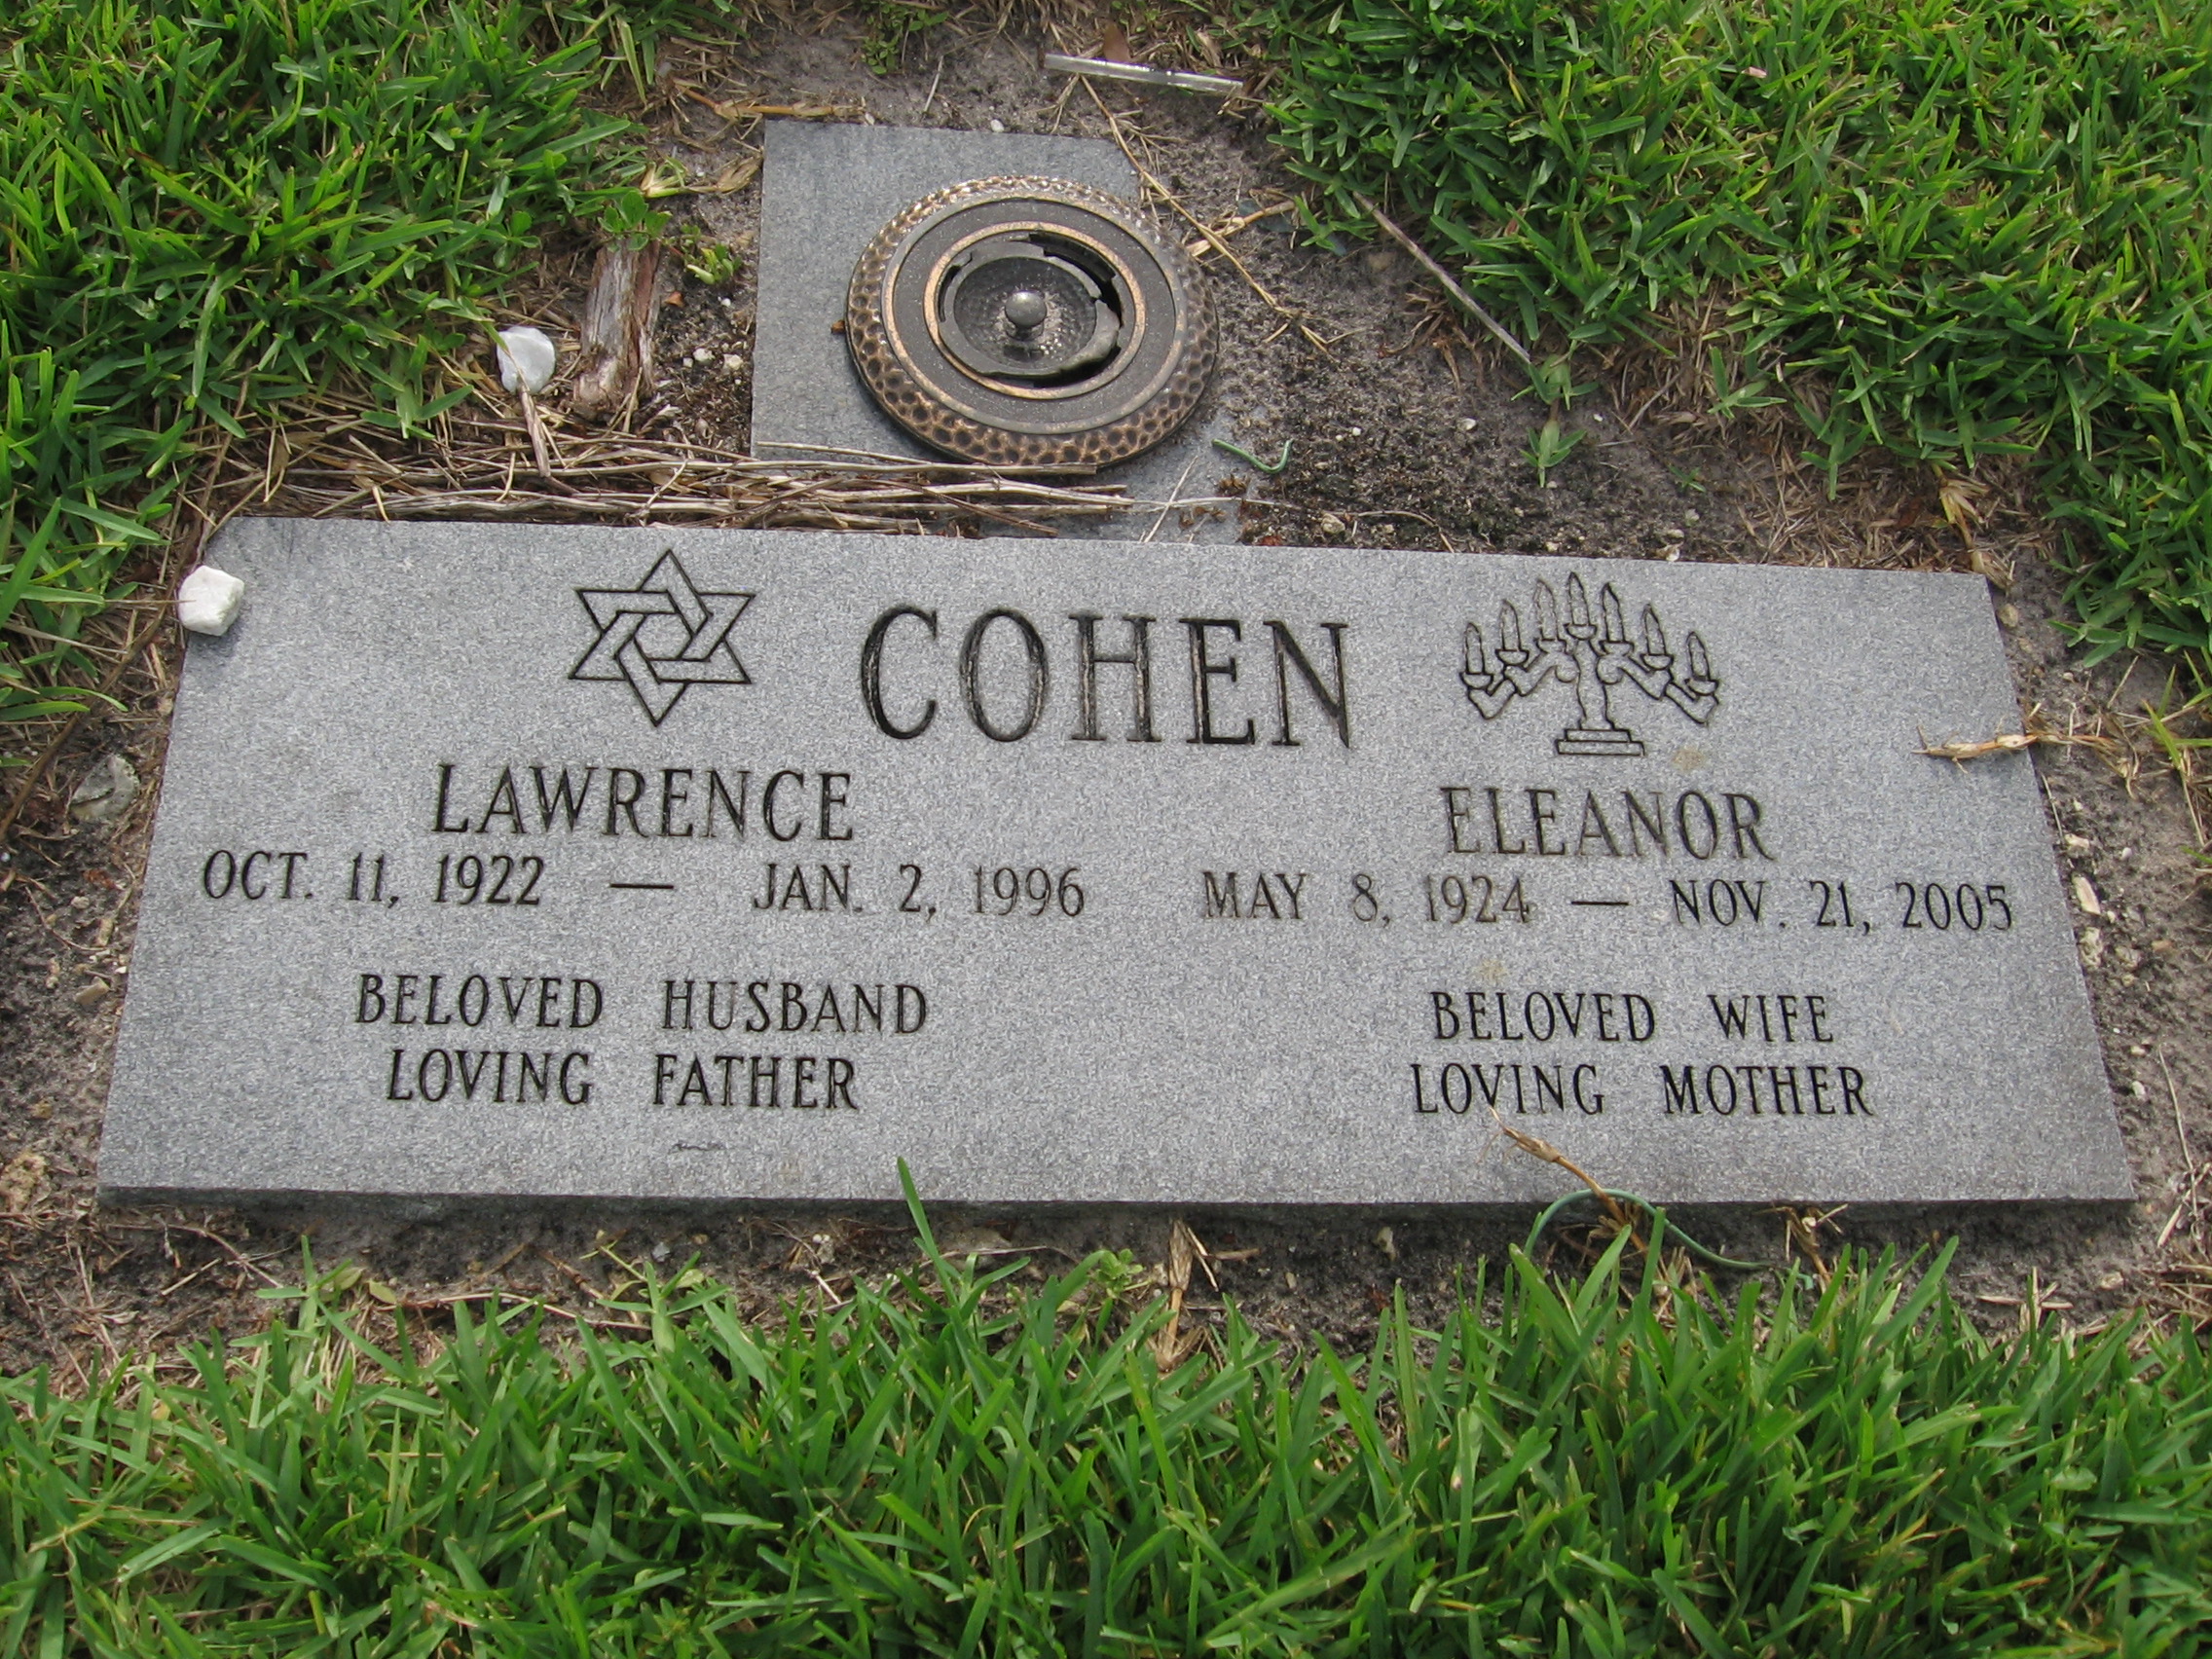 Lawrence Cohen